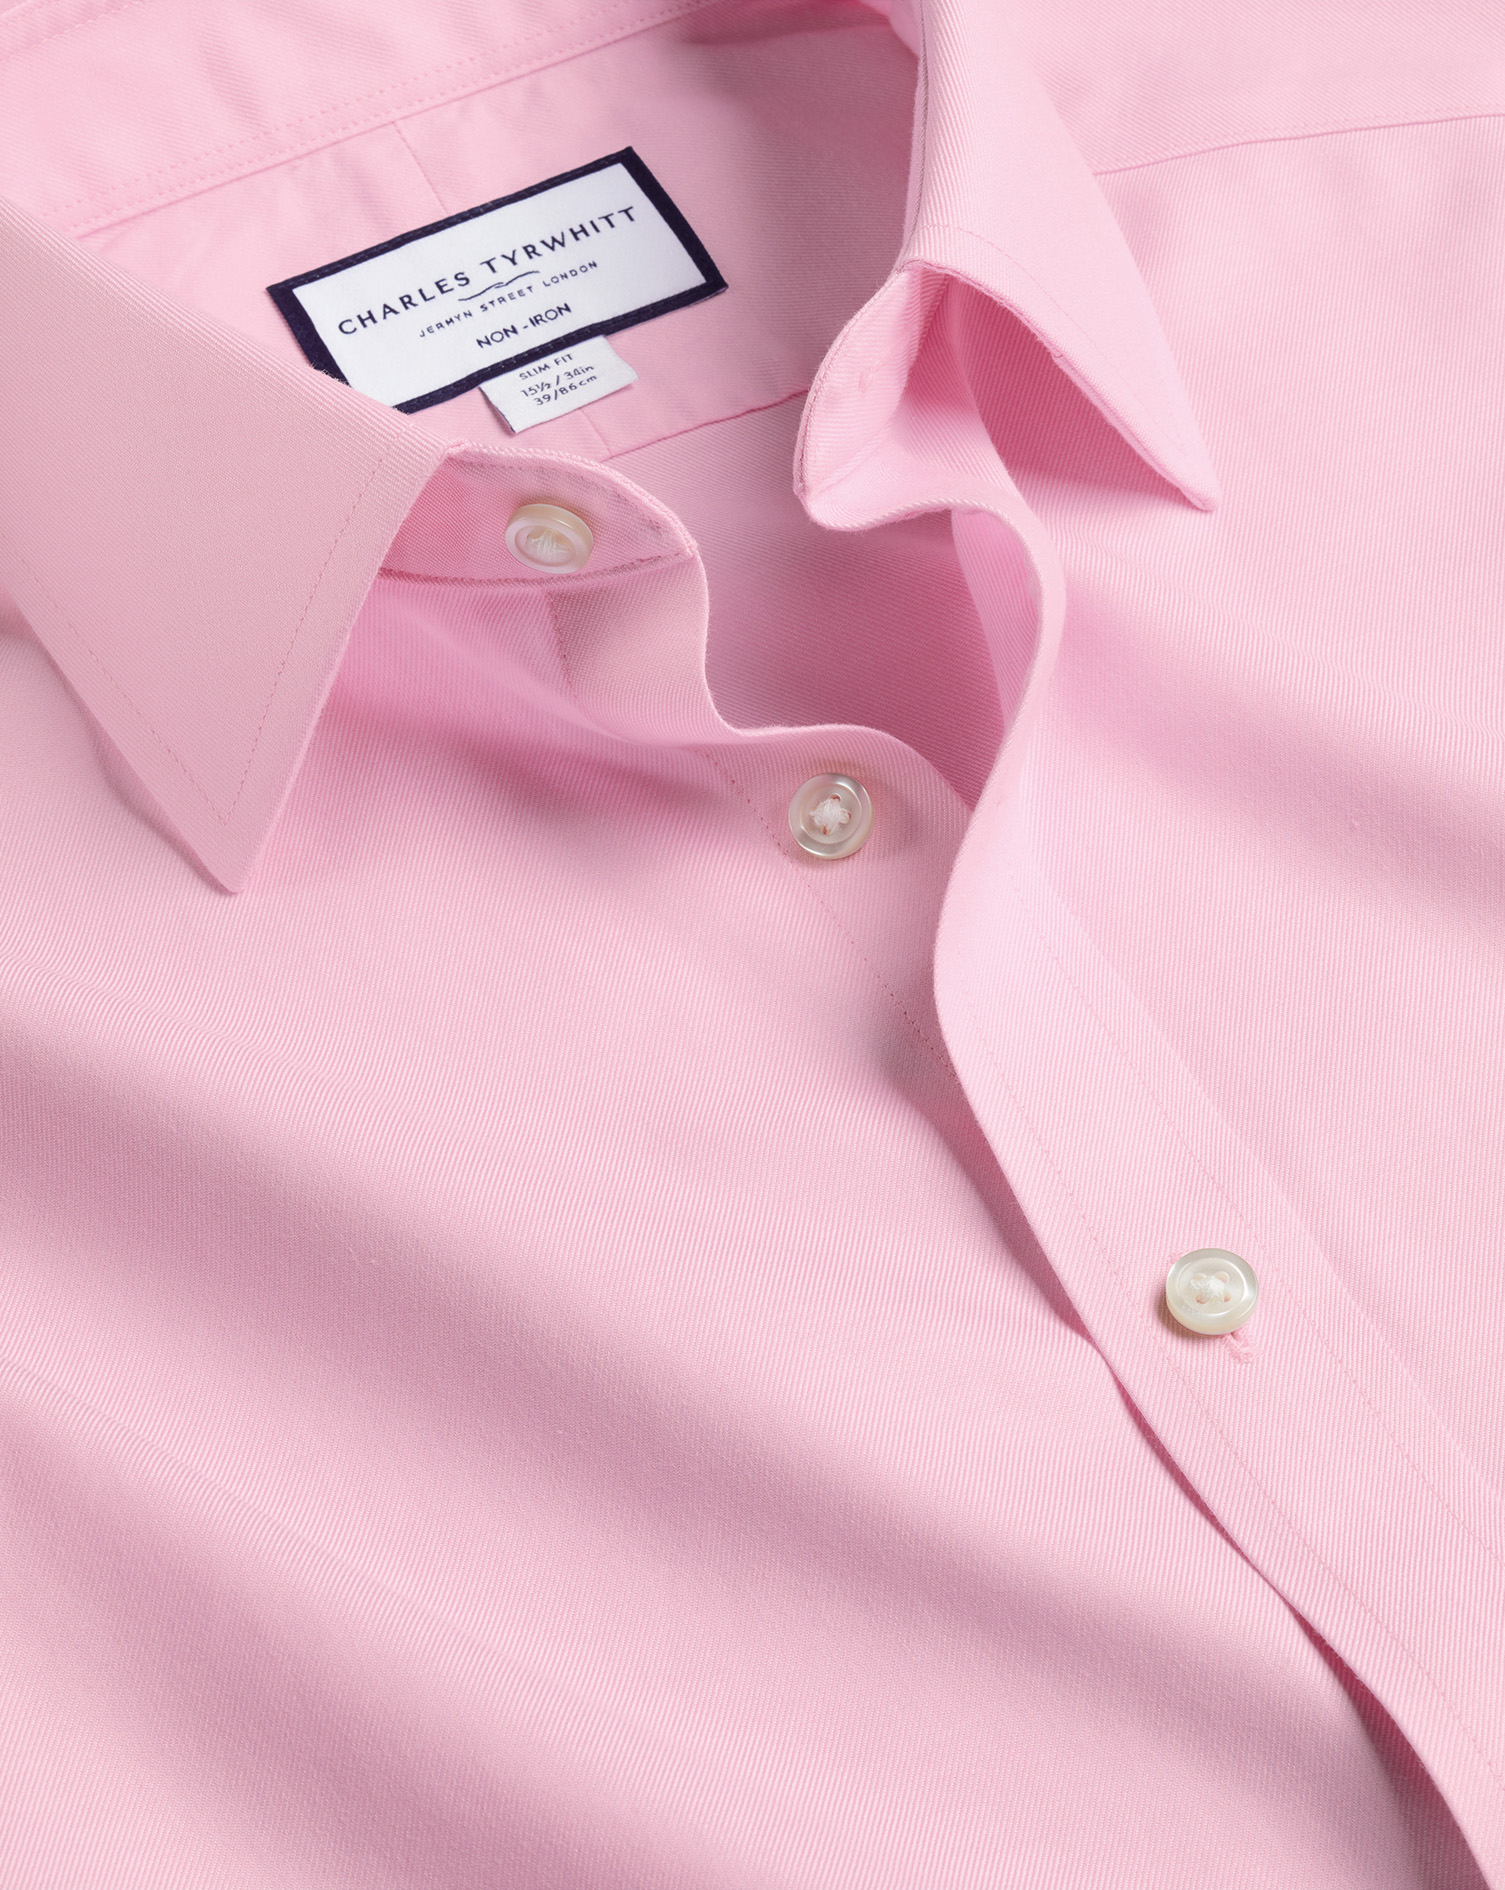 Men's Charles Tyrwhitt Non-Iron Twill Dress Shirt - Pink French Cuff Size Small Cotton
